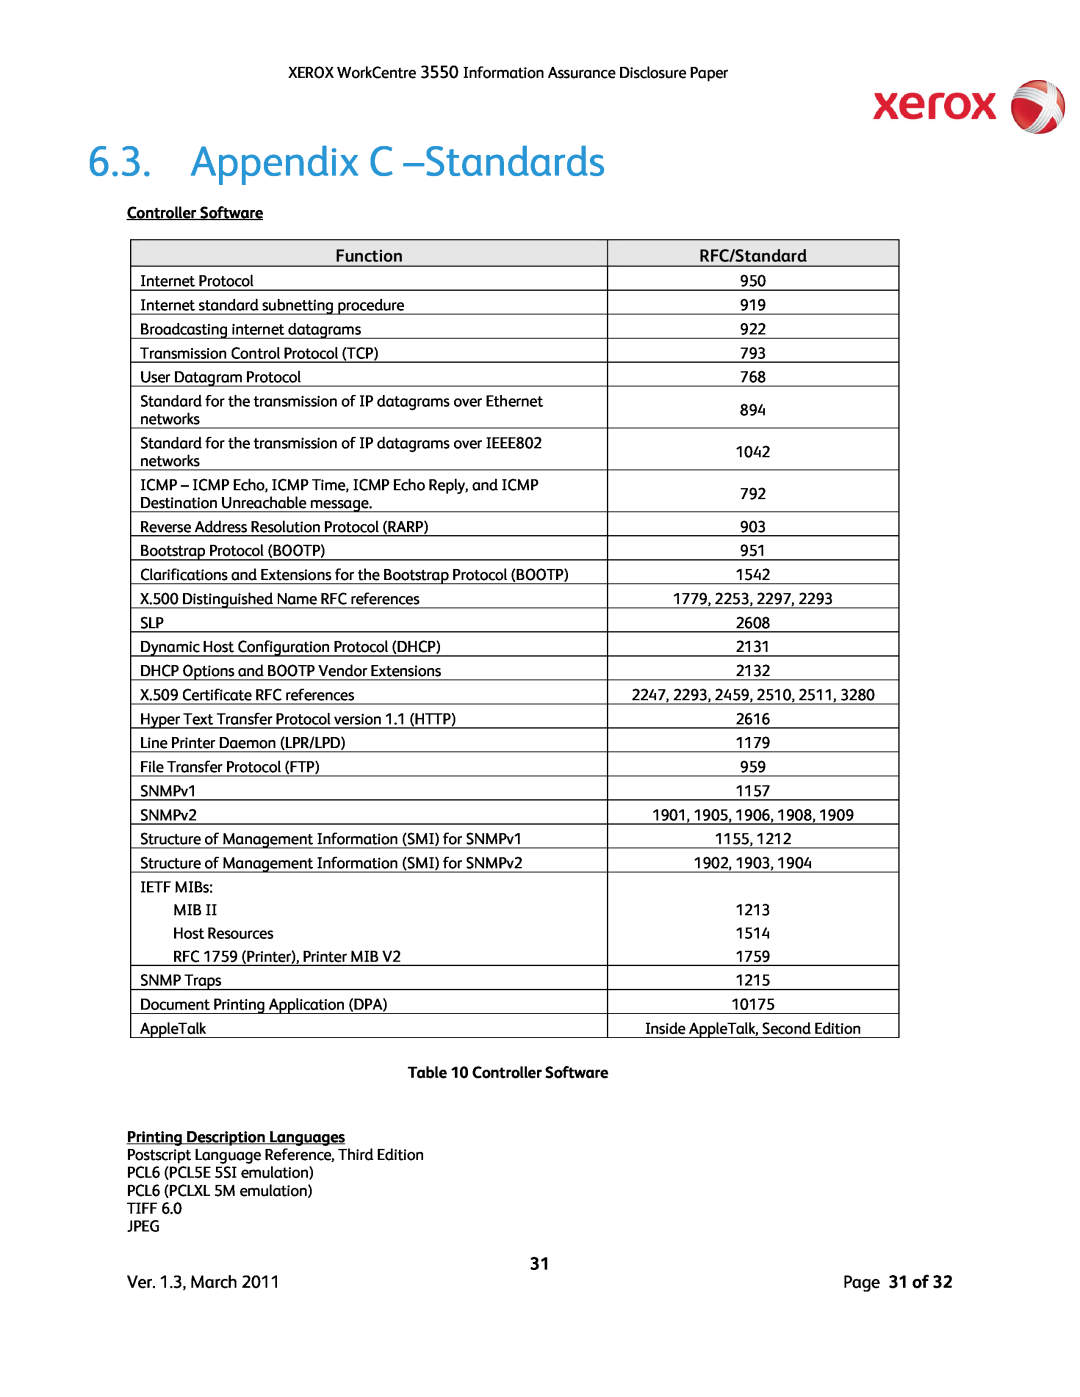 Xerox 3550 manual Appendix C -Standards, Controller Software, RFC/Standard, Printing Description Languages 